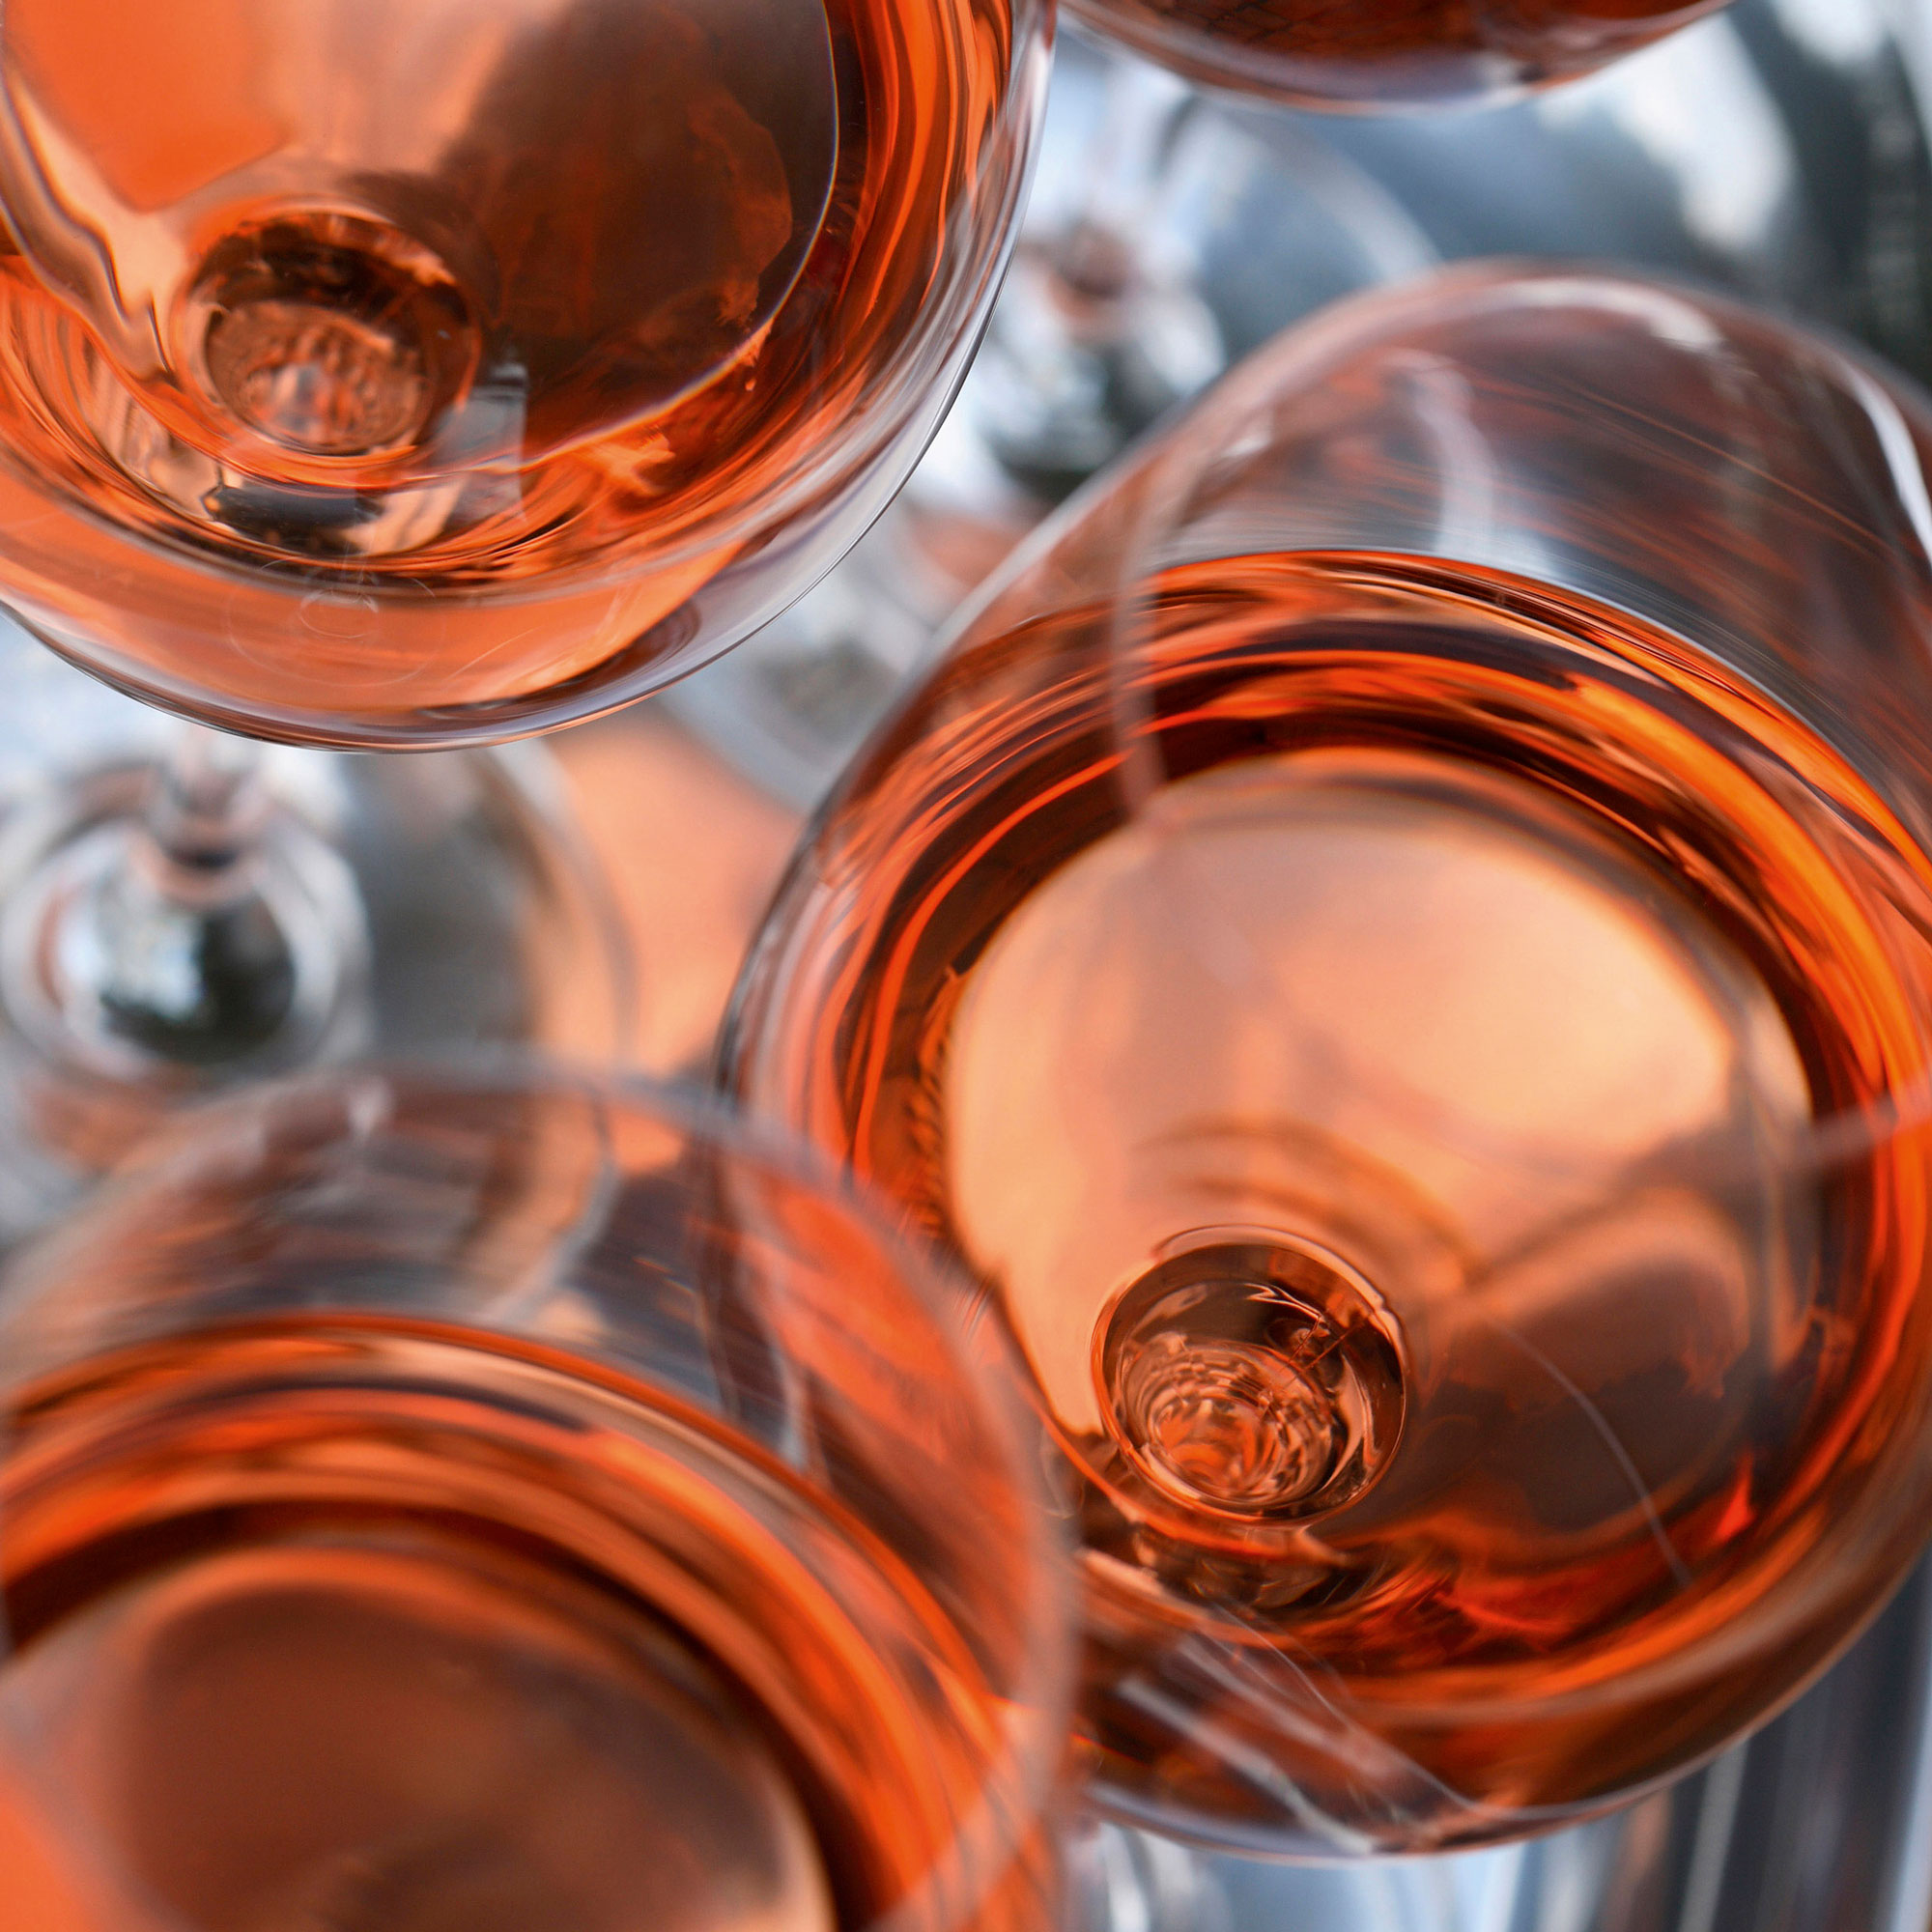 F.A.Z. Weinselection - Sechs Flaschen Rosé aus deutschen Weingebieten